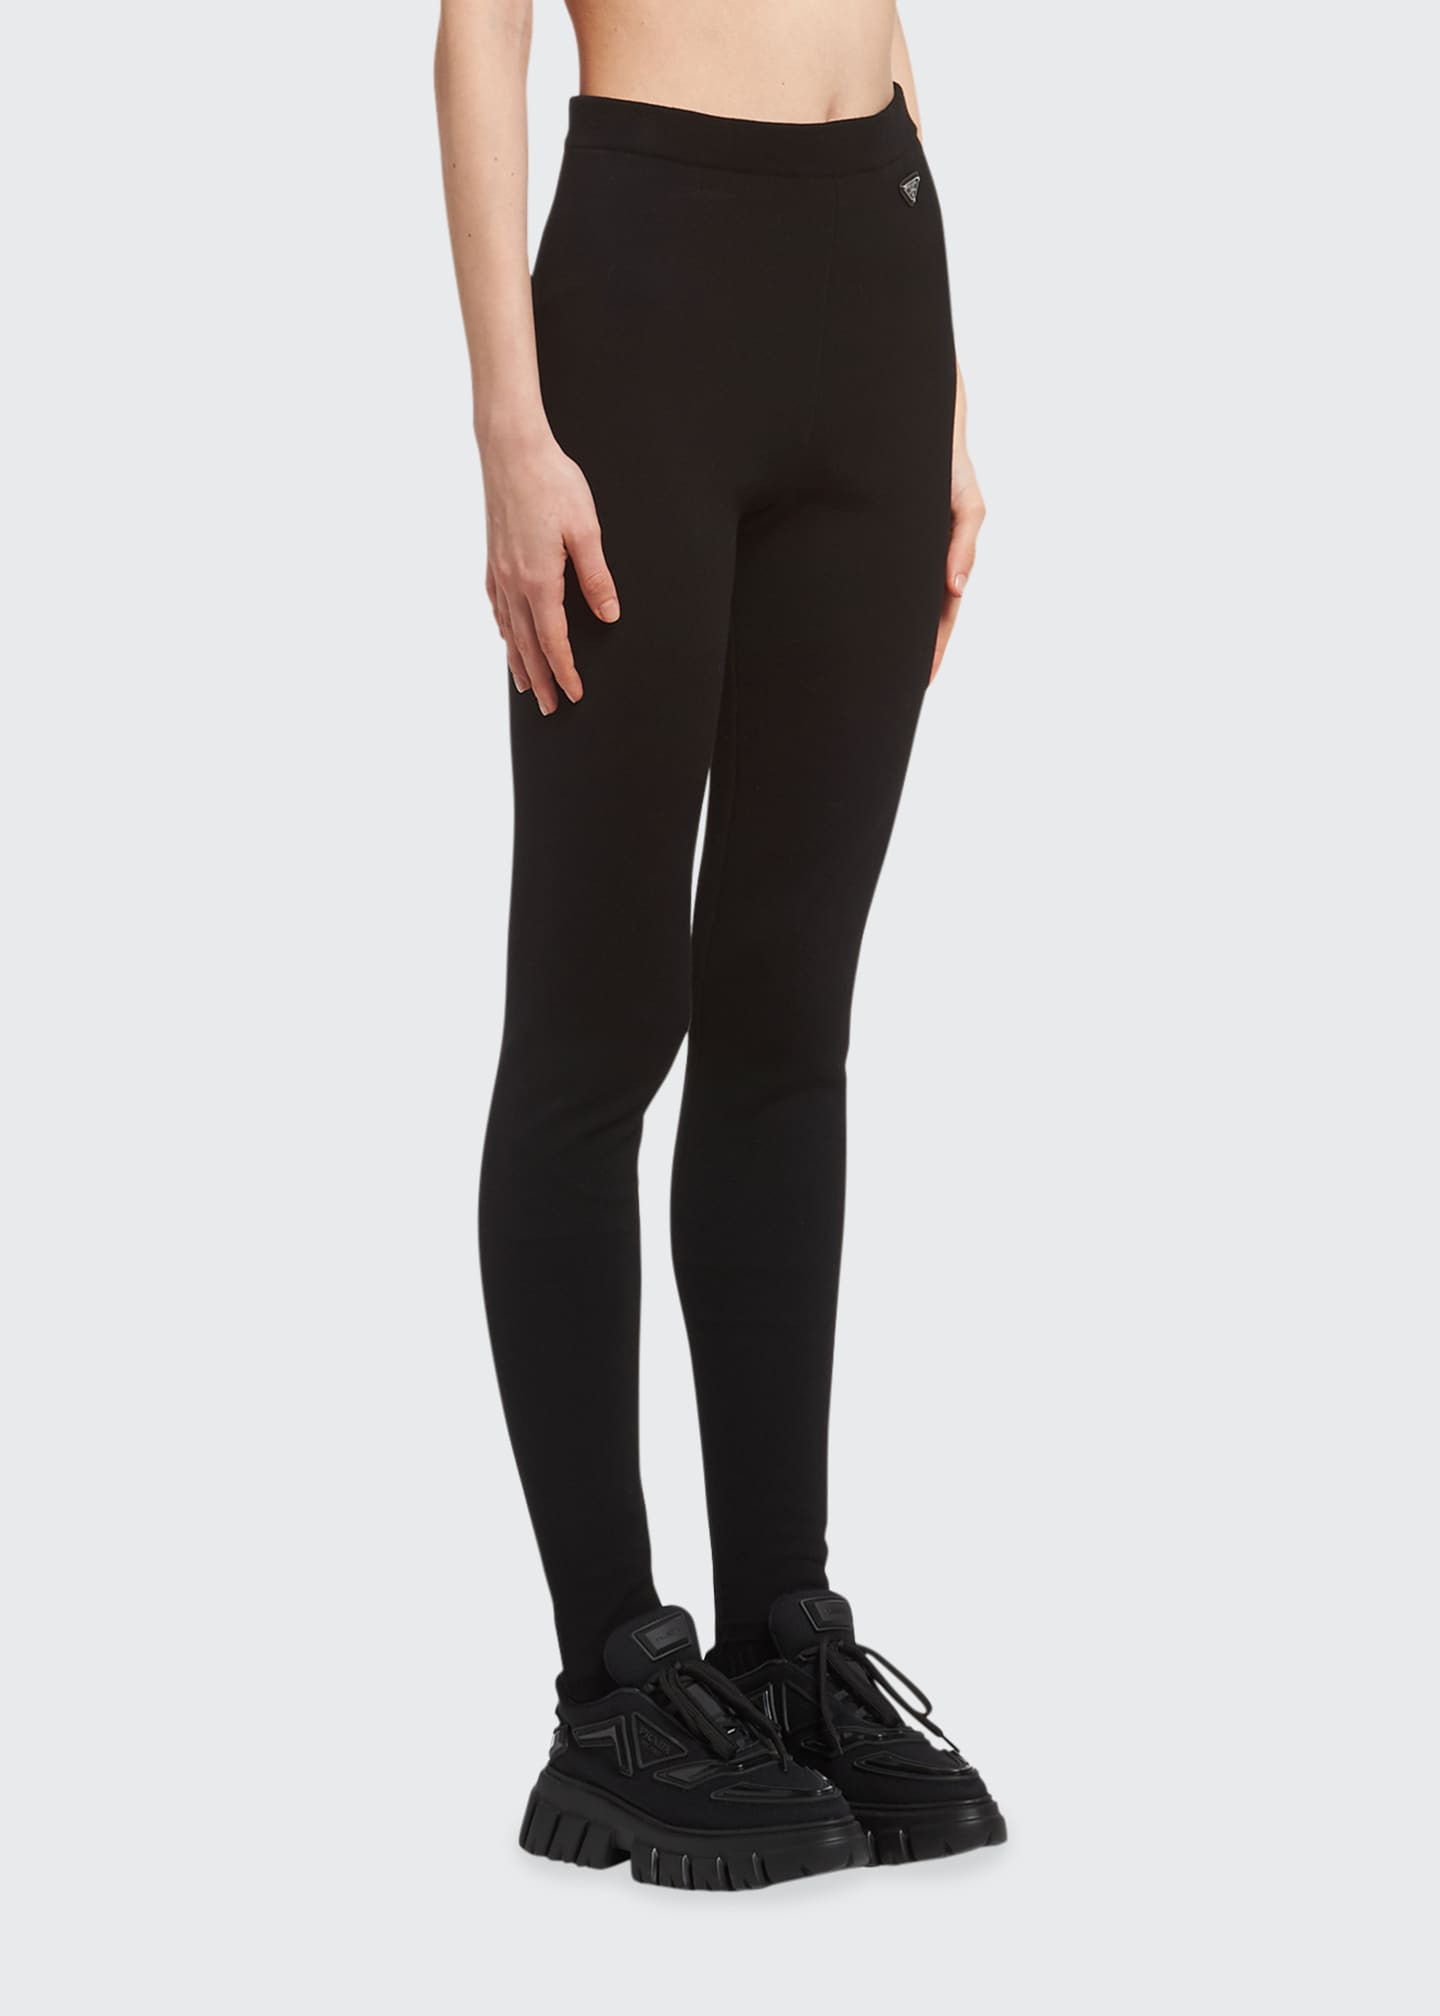 Buy STOP Solid Regular Fit Viscose Blend Women's Formal Leggings